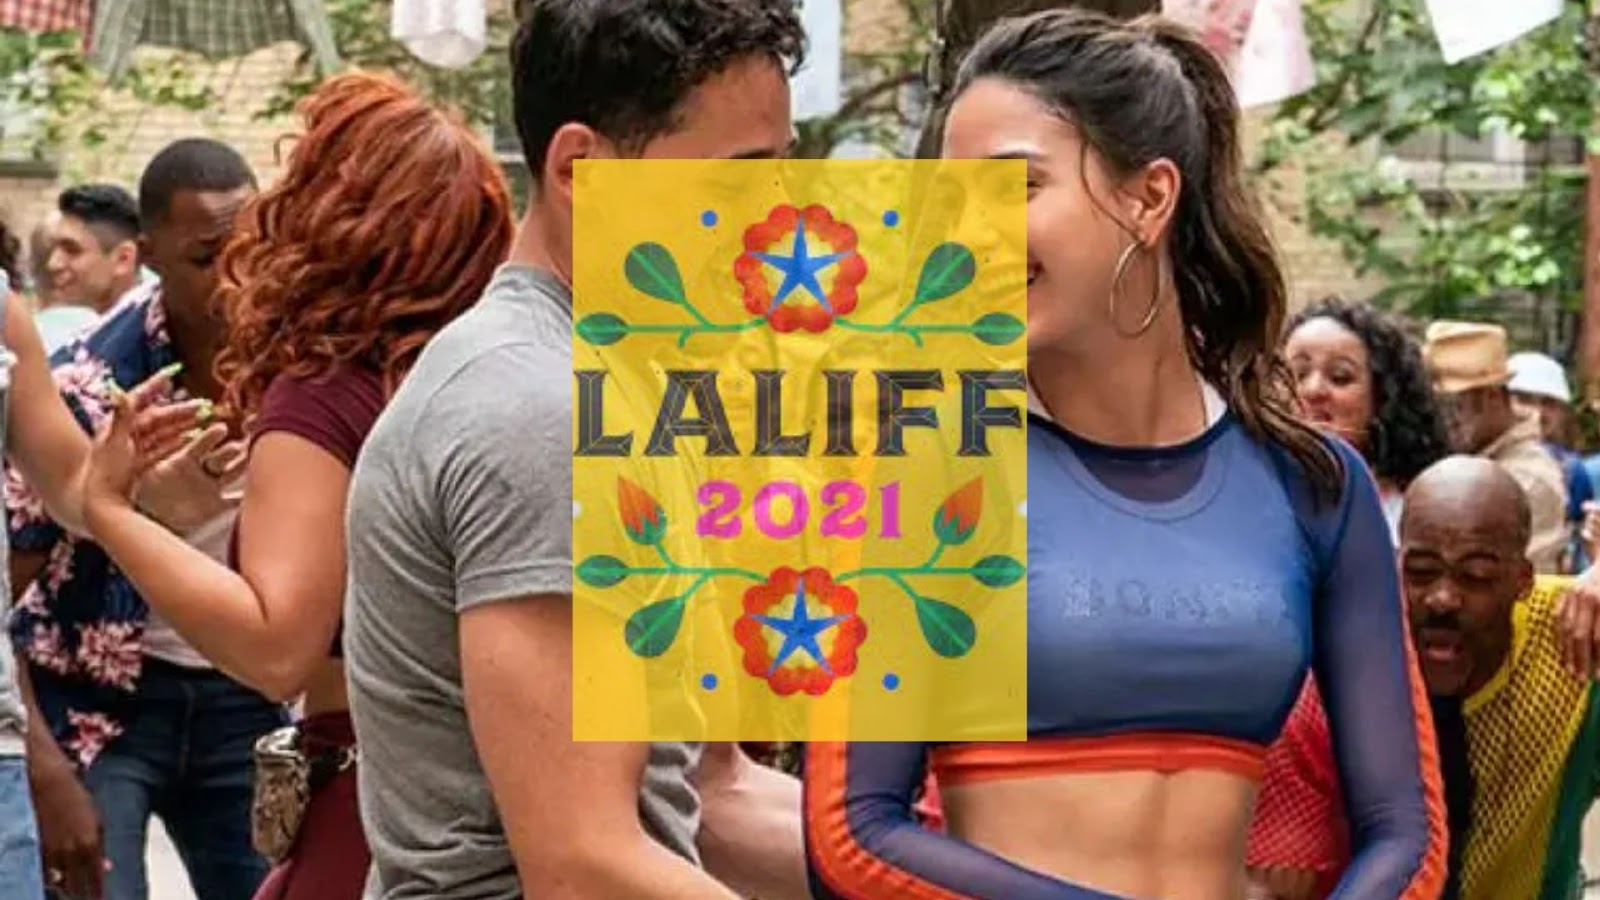 LALIFF 2021 BELatina Latinx